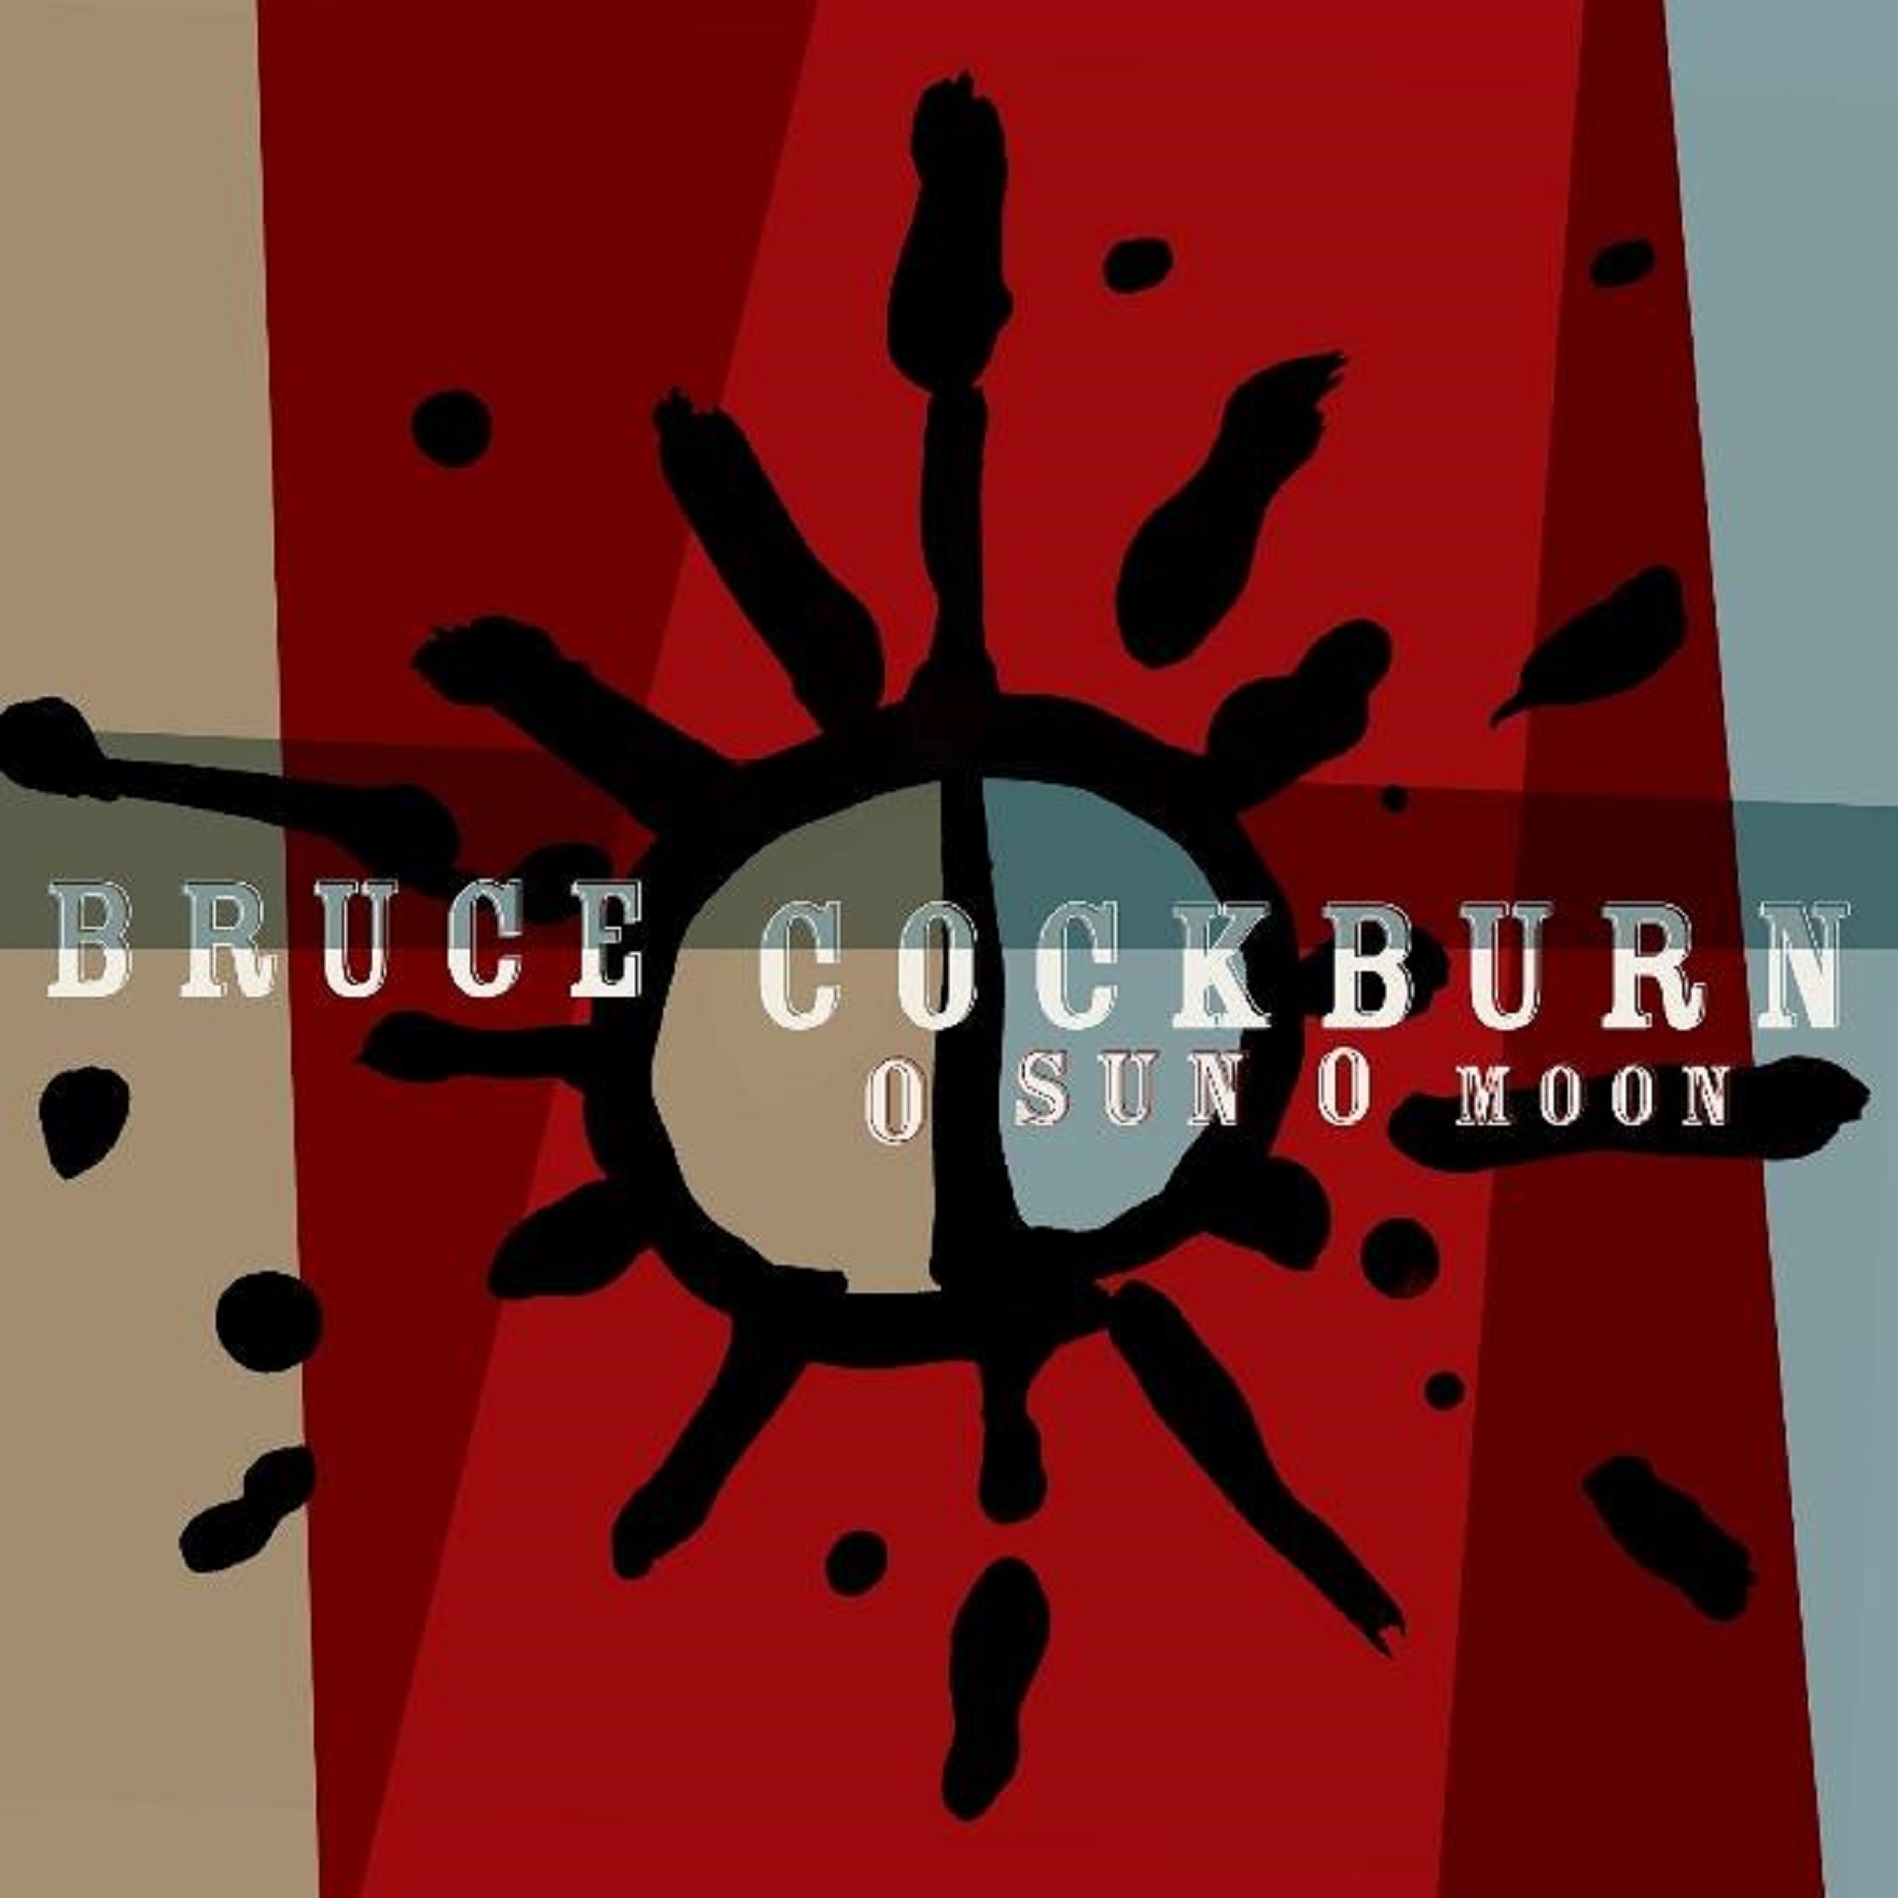 Bruce Cockburn Announces "Us All" Single + Additional World Tour Dates